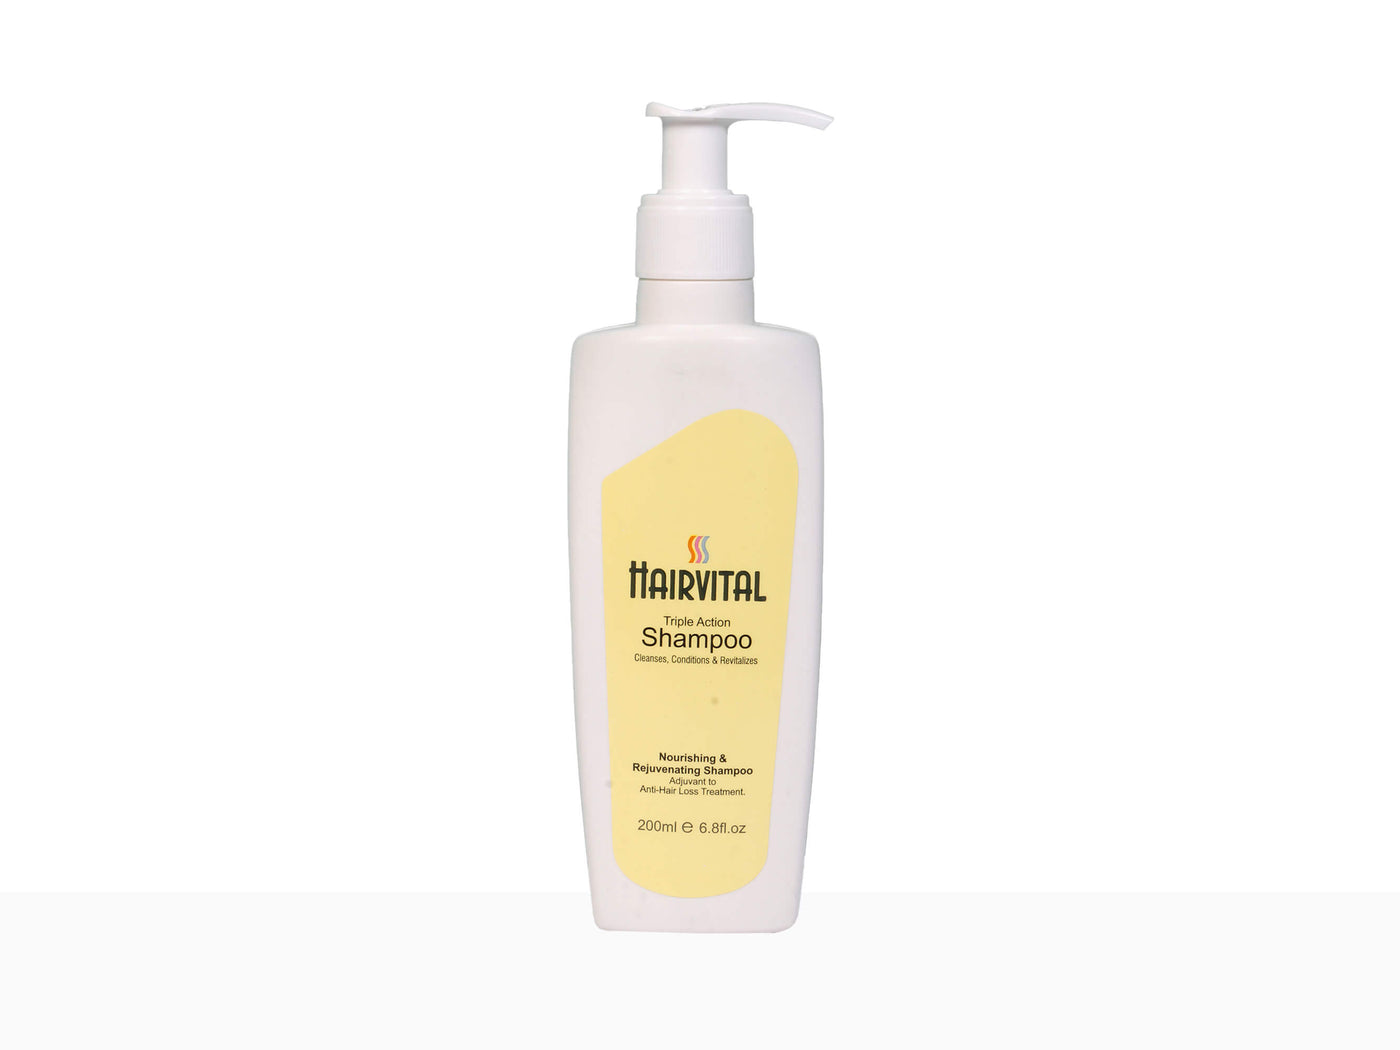 Hairvital shampoo triple action - Clinikally